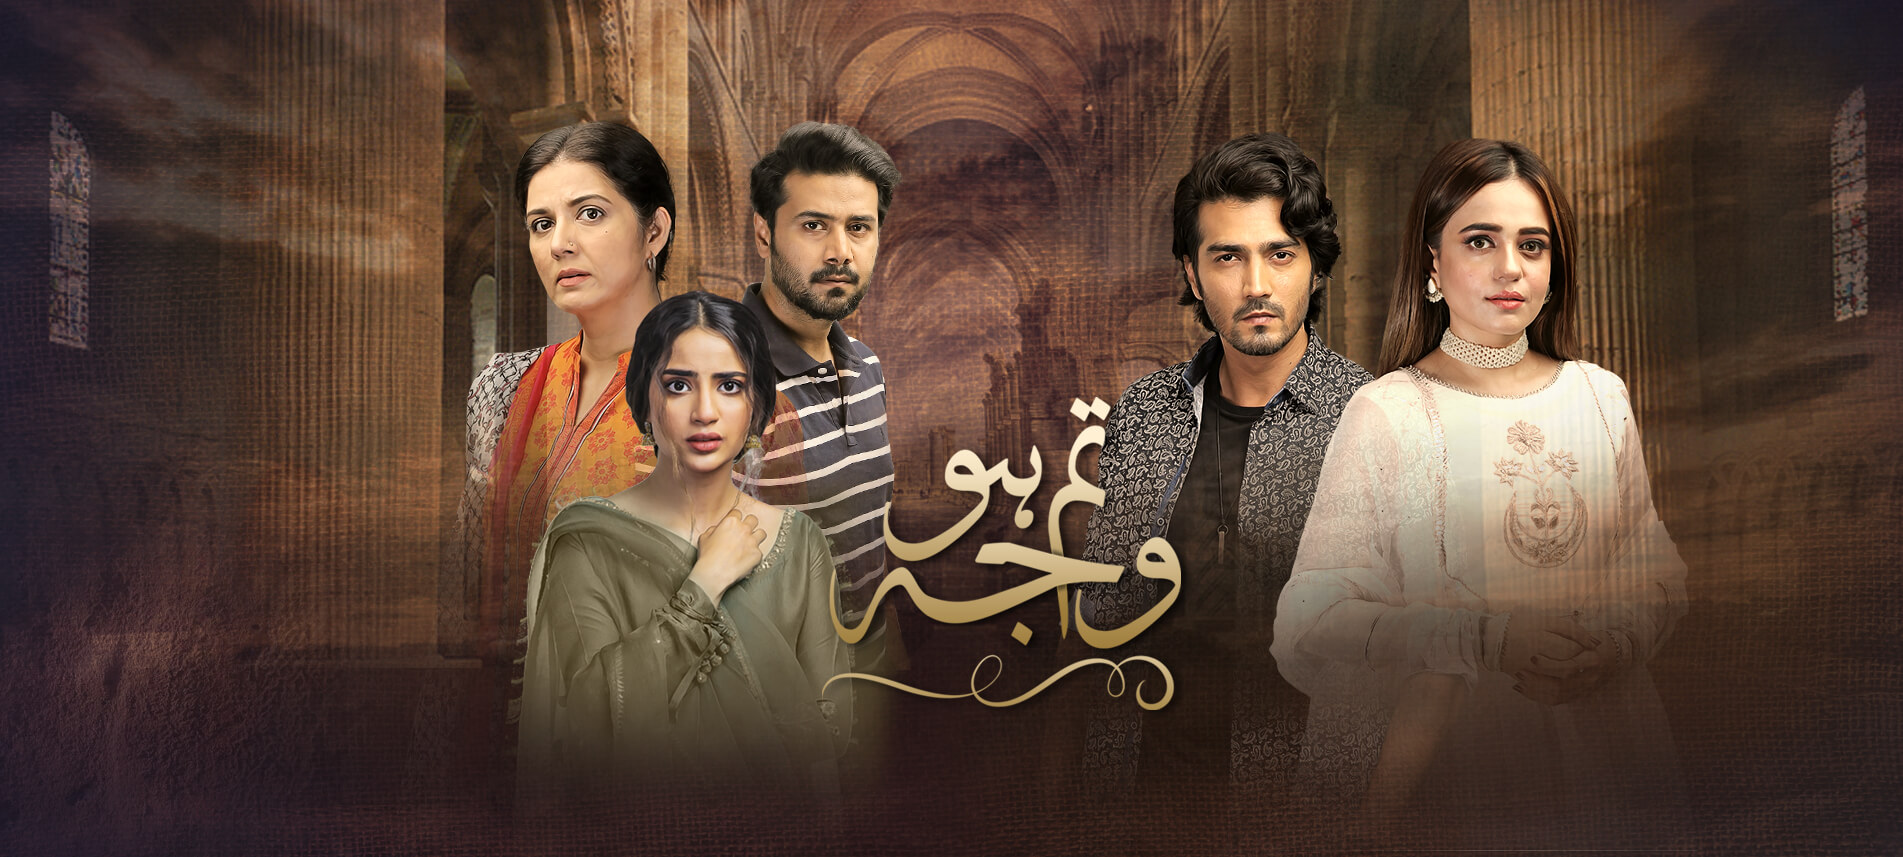 Hum TV New Dramas Episodes Online Pakistani Dramas Online In HD